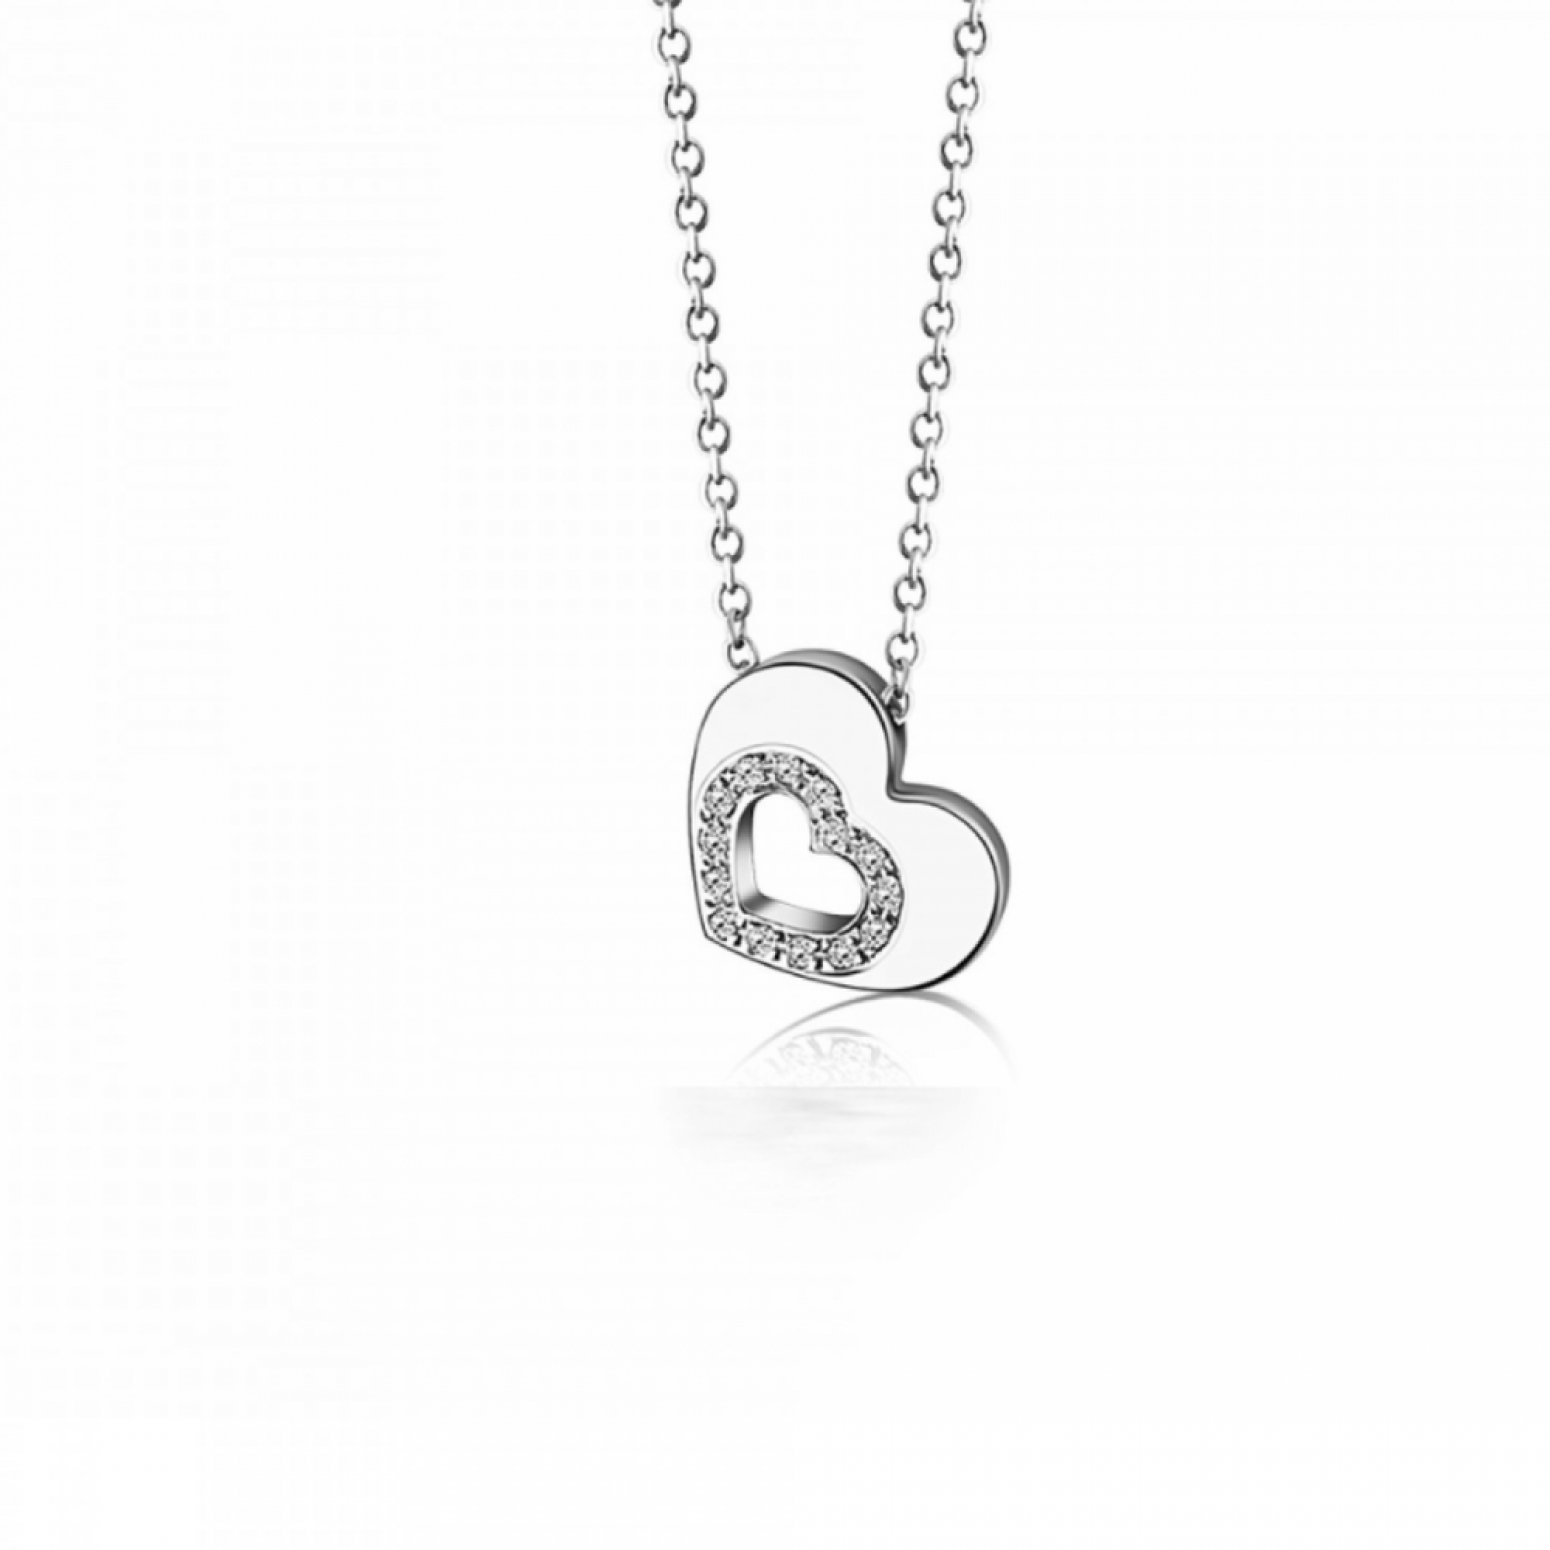 Heart necklace, Κ14 white gold with diamonds 0.06ct, VS2, H ko5616 NECKLACES Κοσμηματα - chrilia.gr